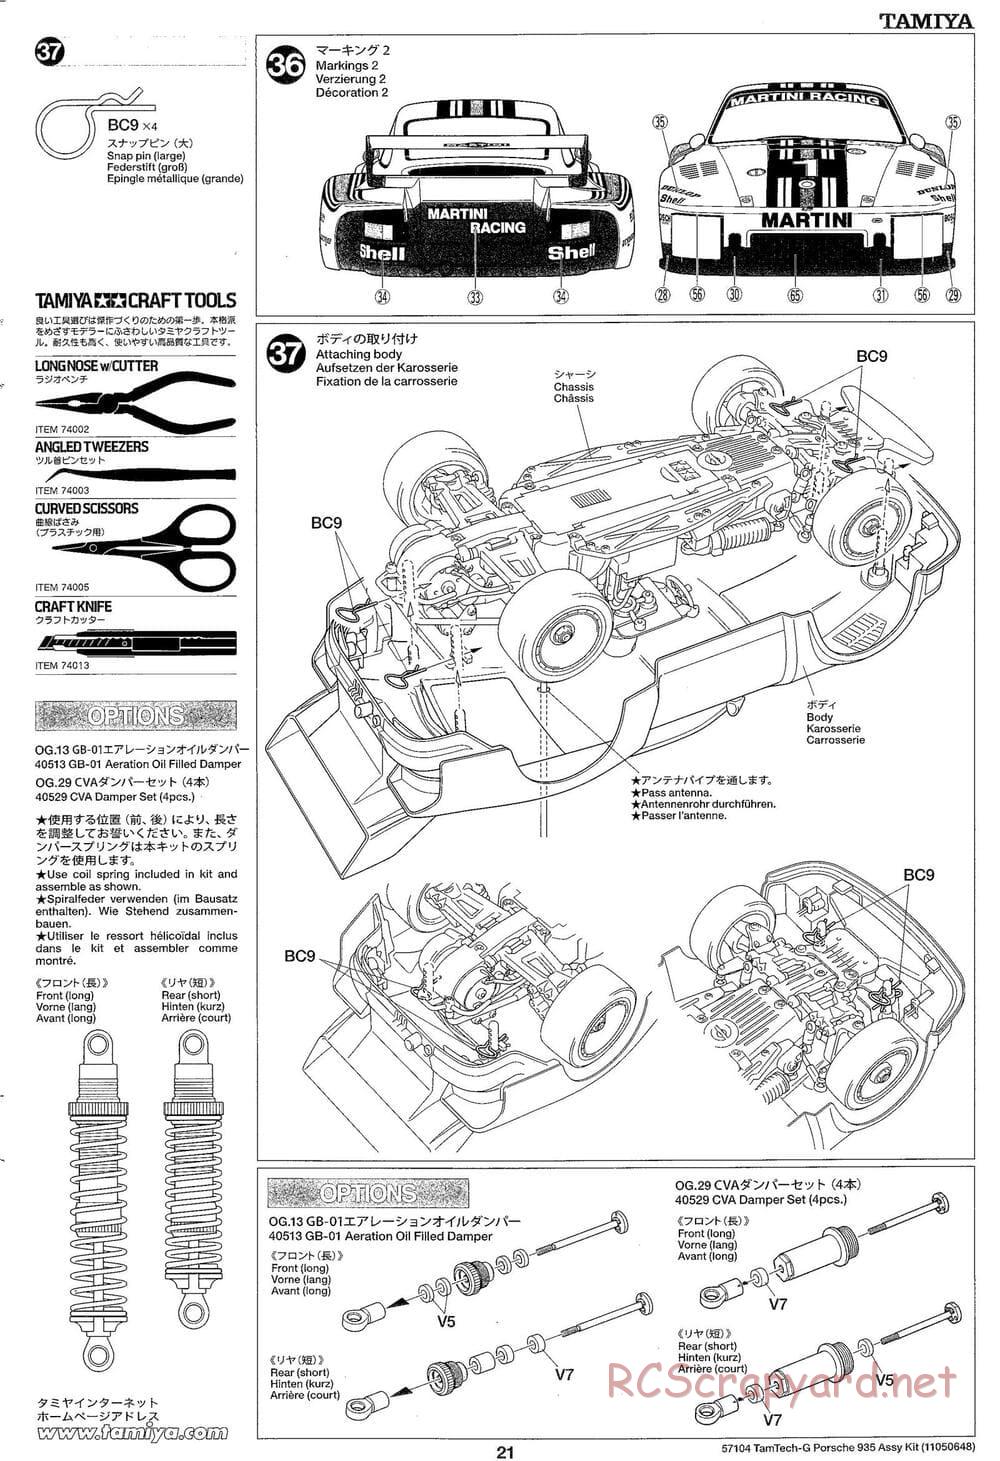 Tamiya - Porsche 935 Martini - GT-01 Chassis - Manual - Page 21